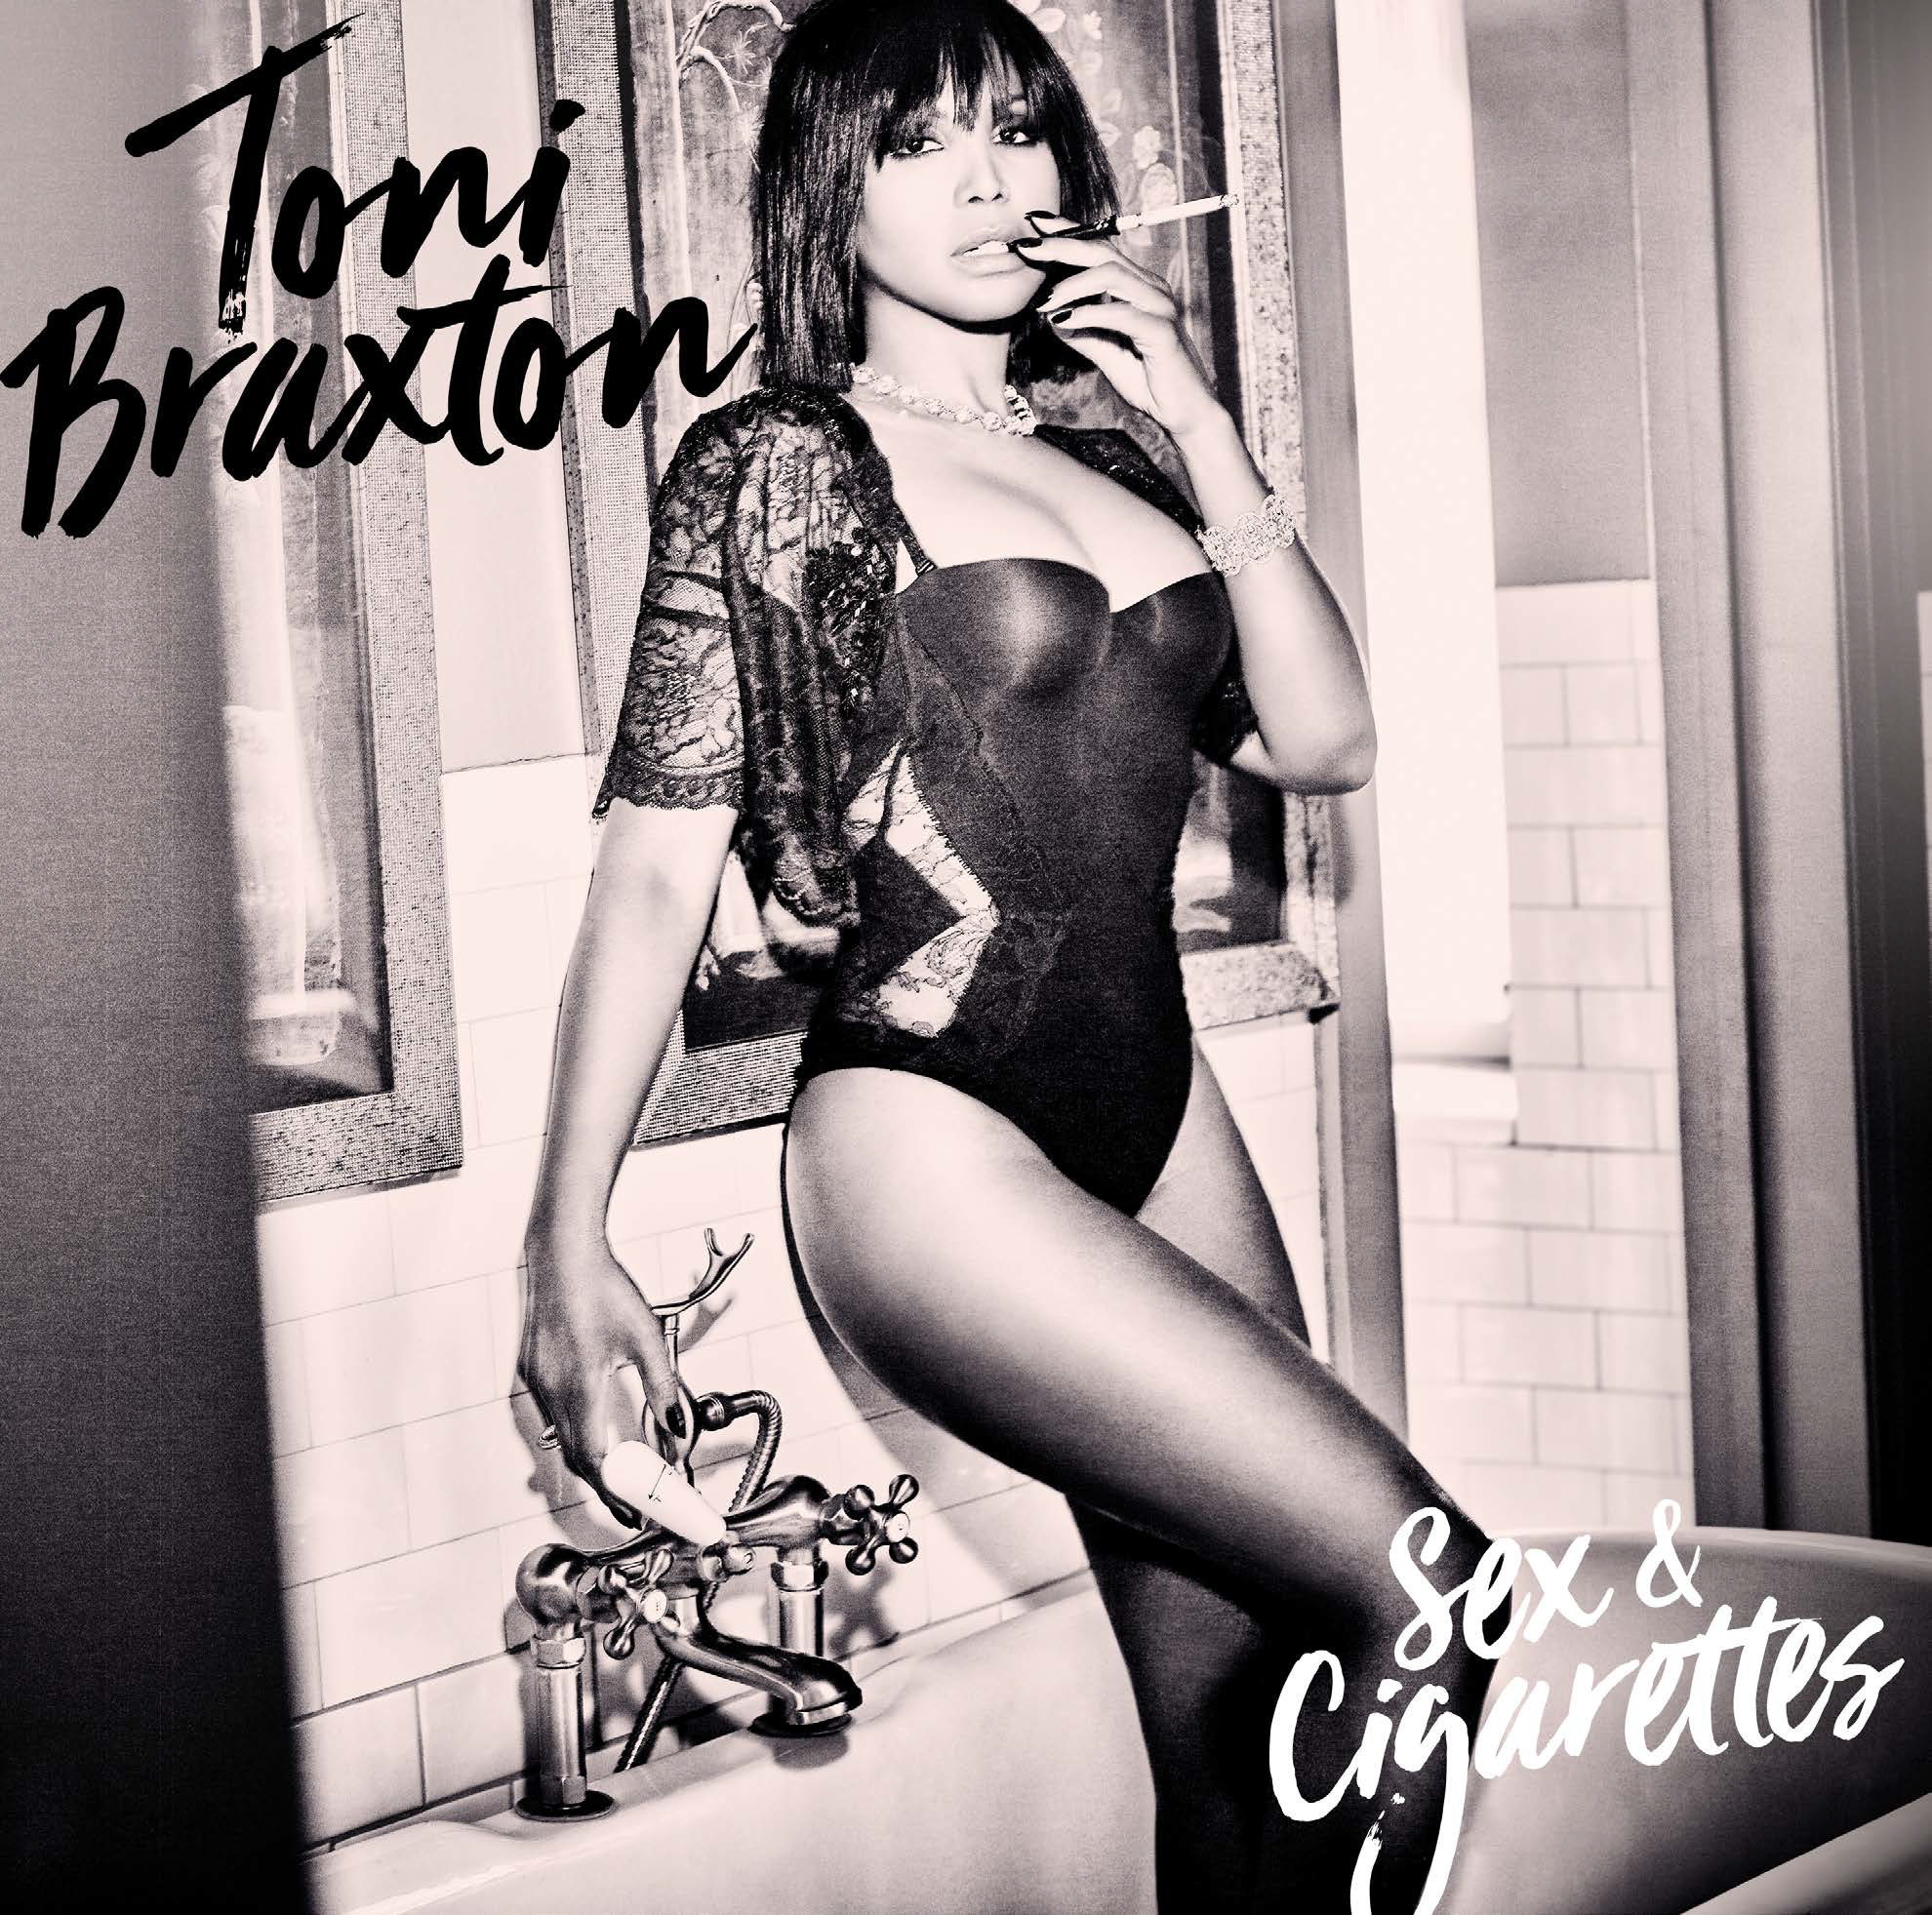 Toni Braxton Reveals Official Sex And Cigarettes Album